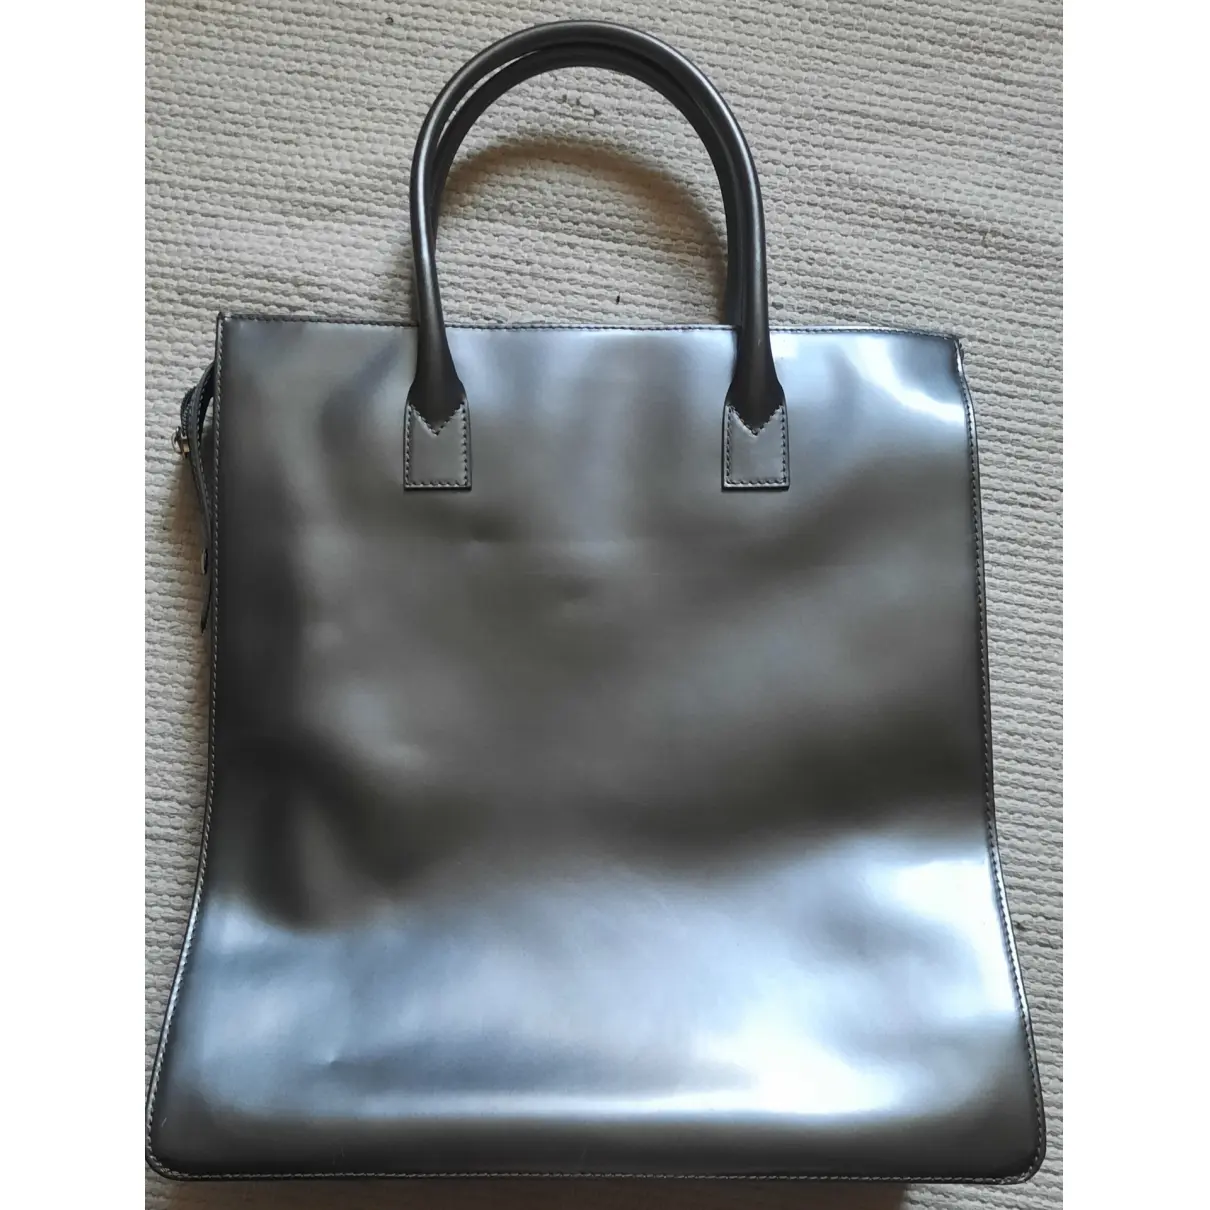 Buy I BLUES Patent leather handbag online